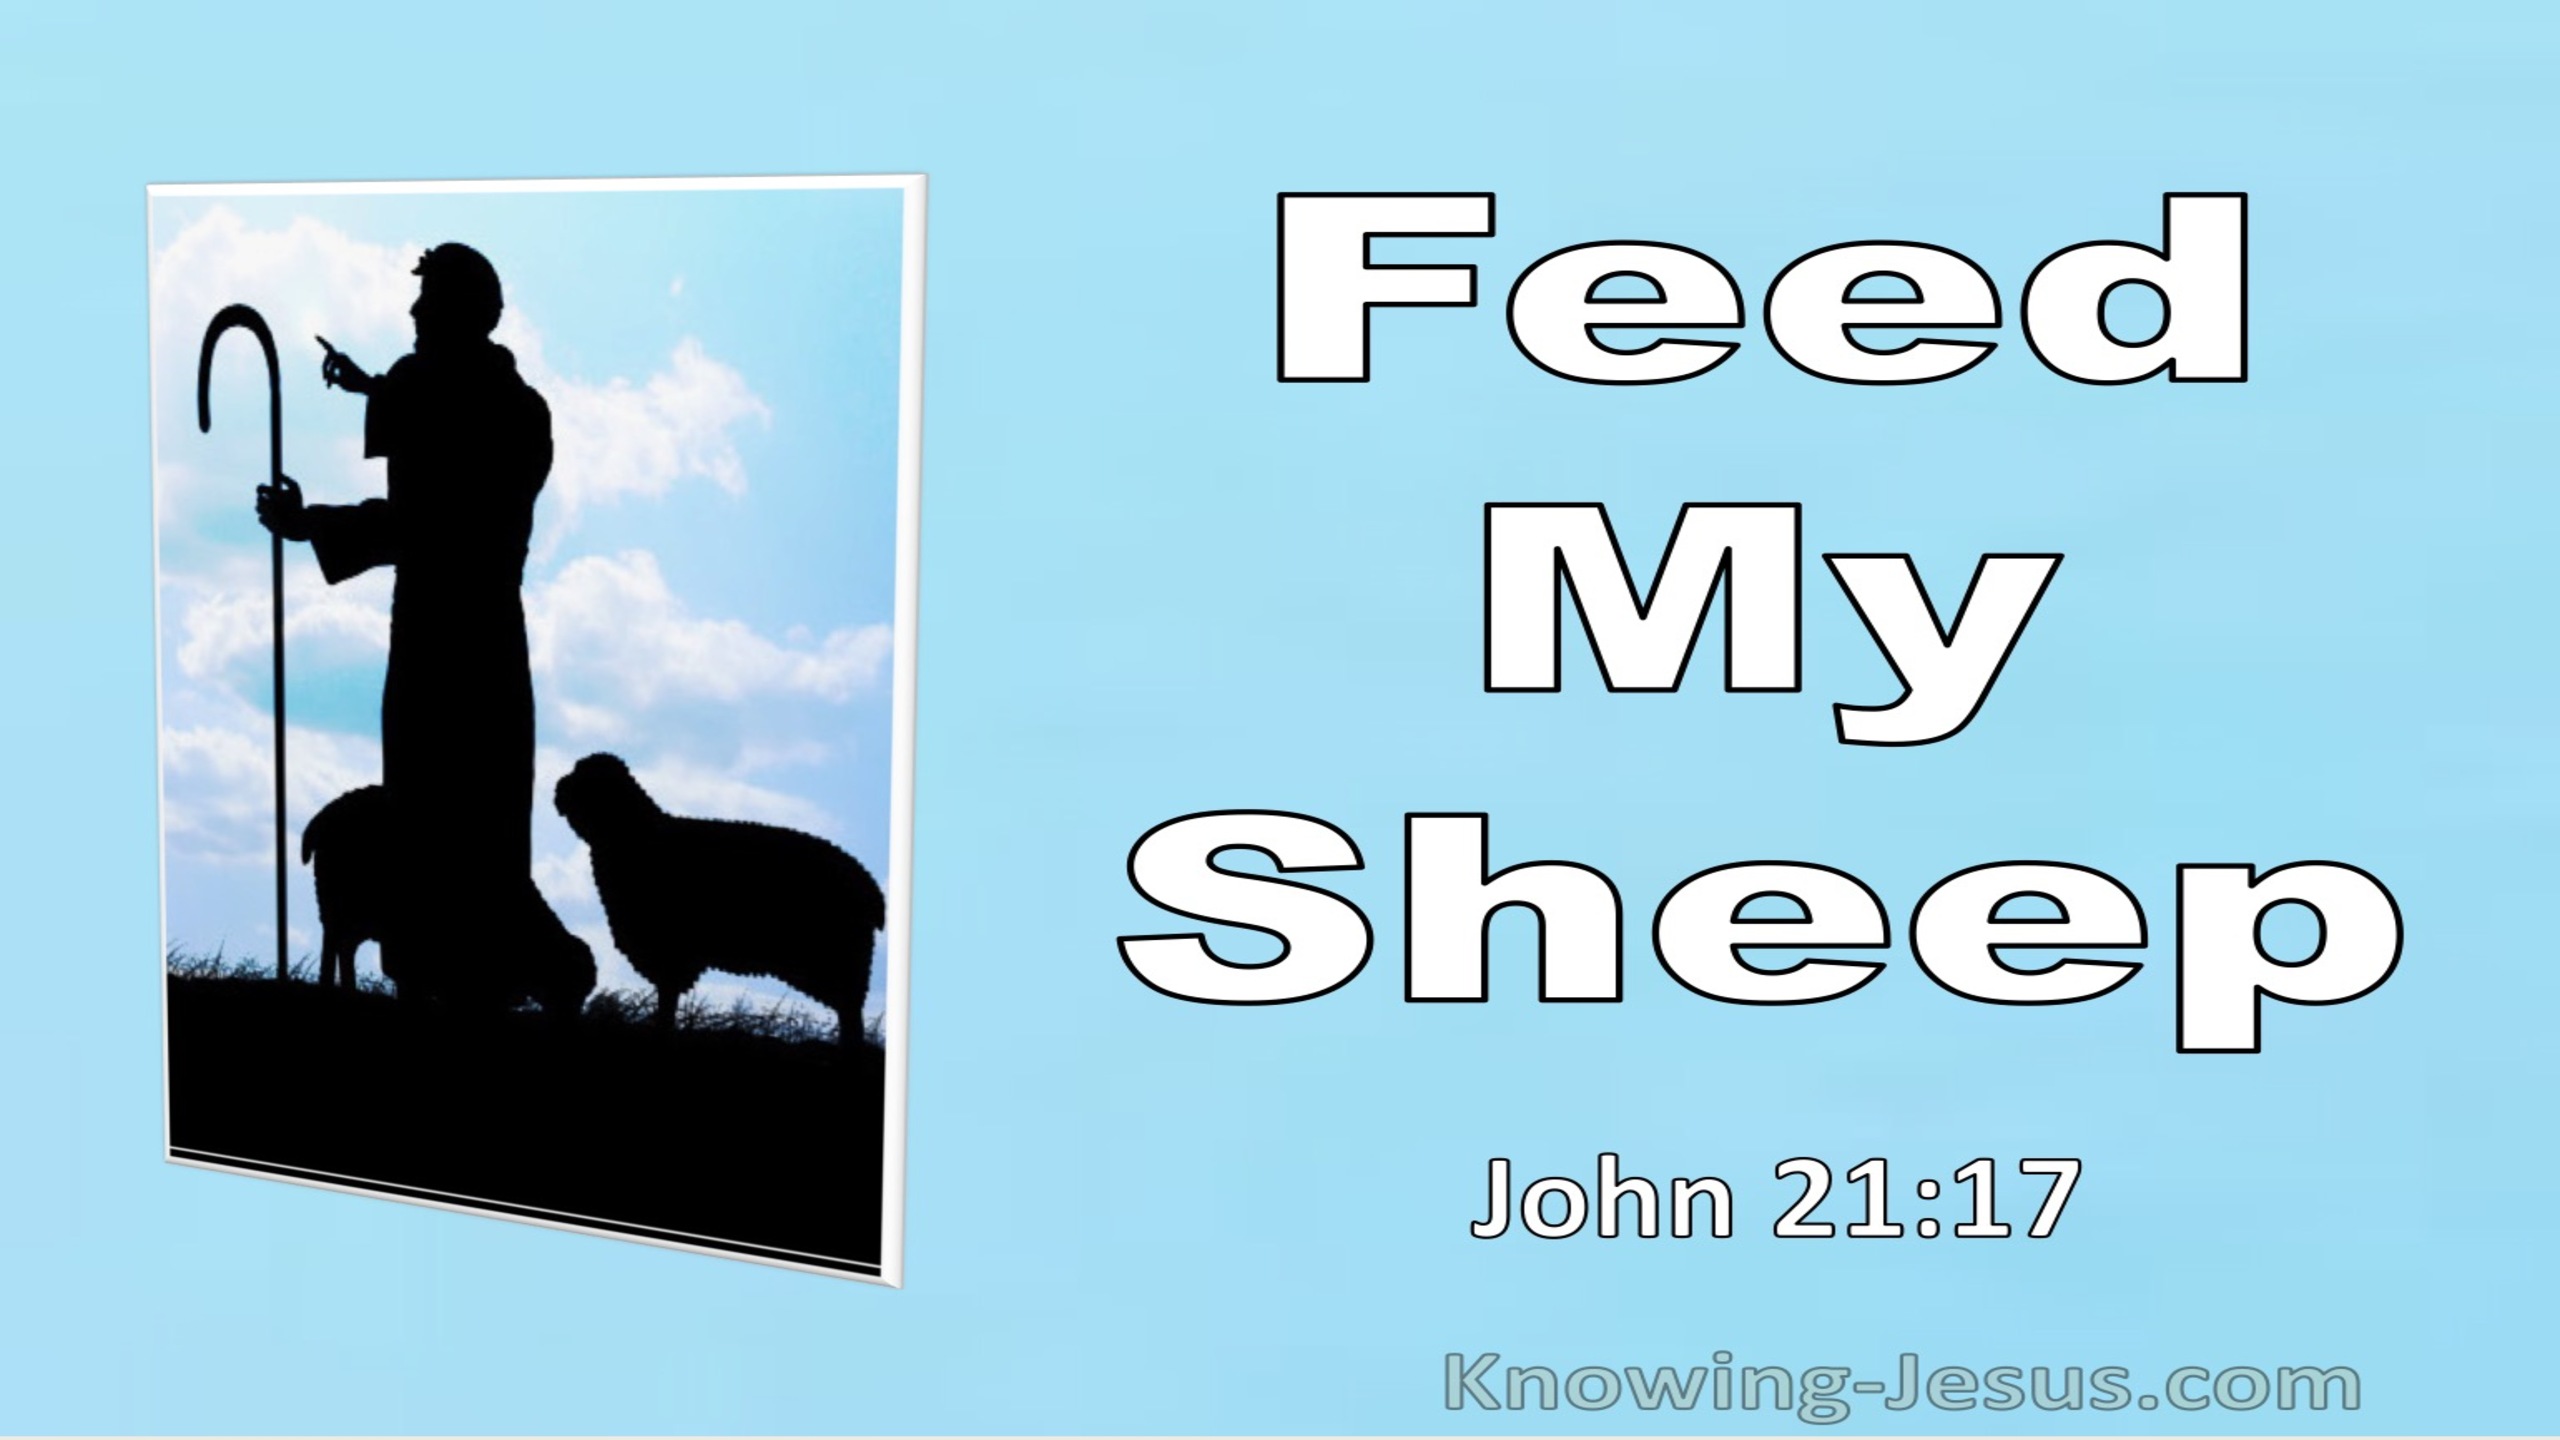 John 21:17 Feed My Sheep (utmost)03:03